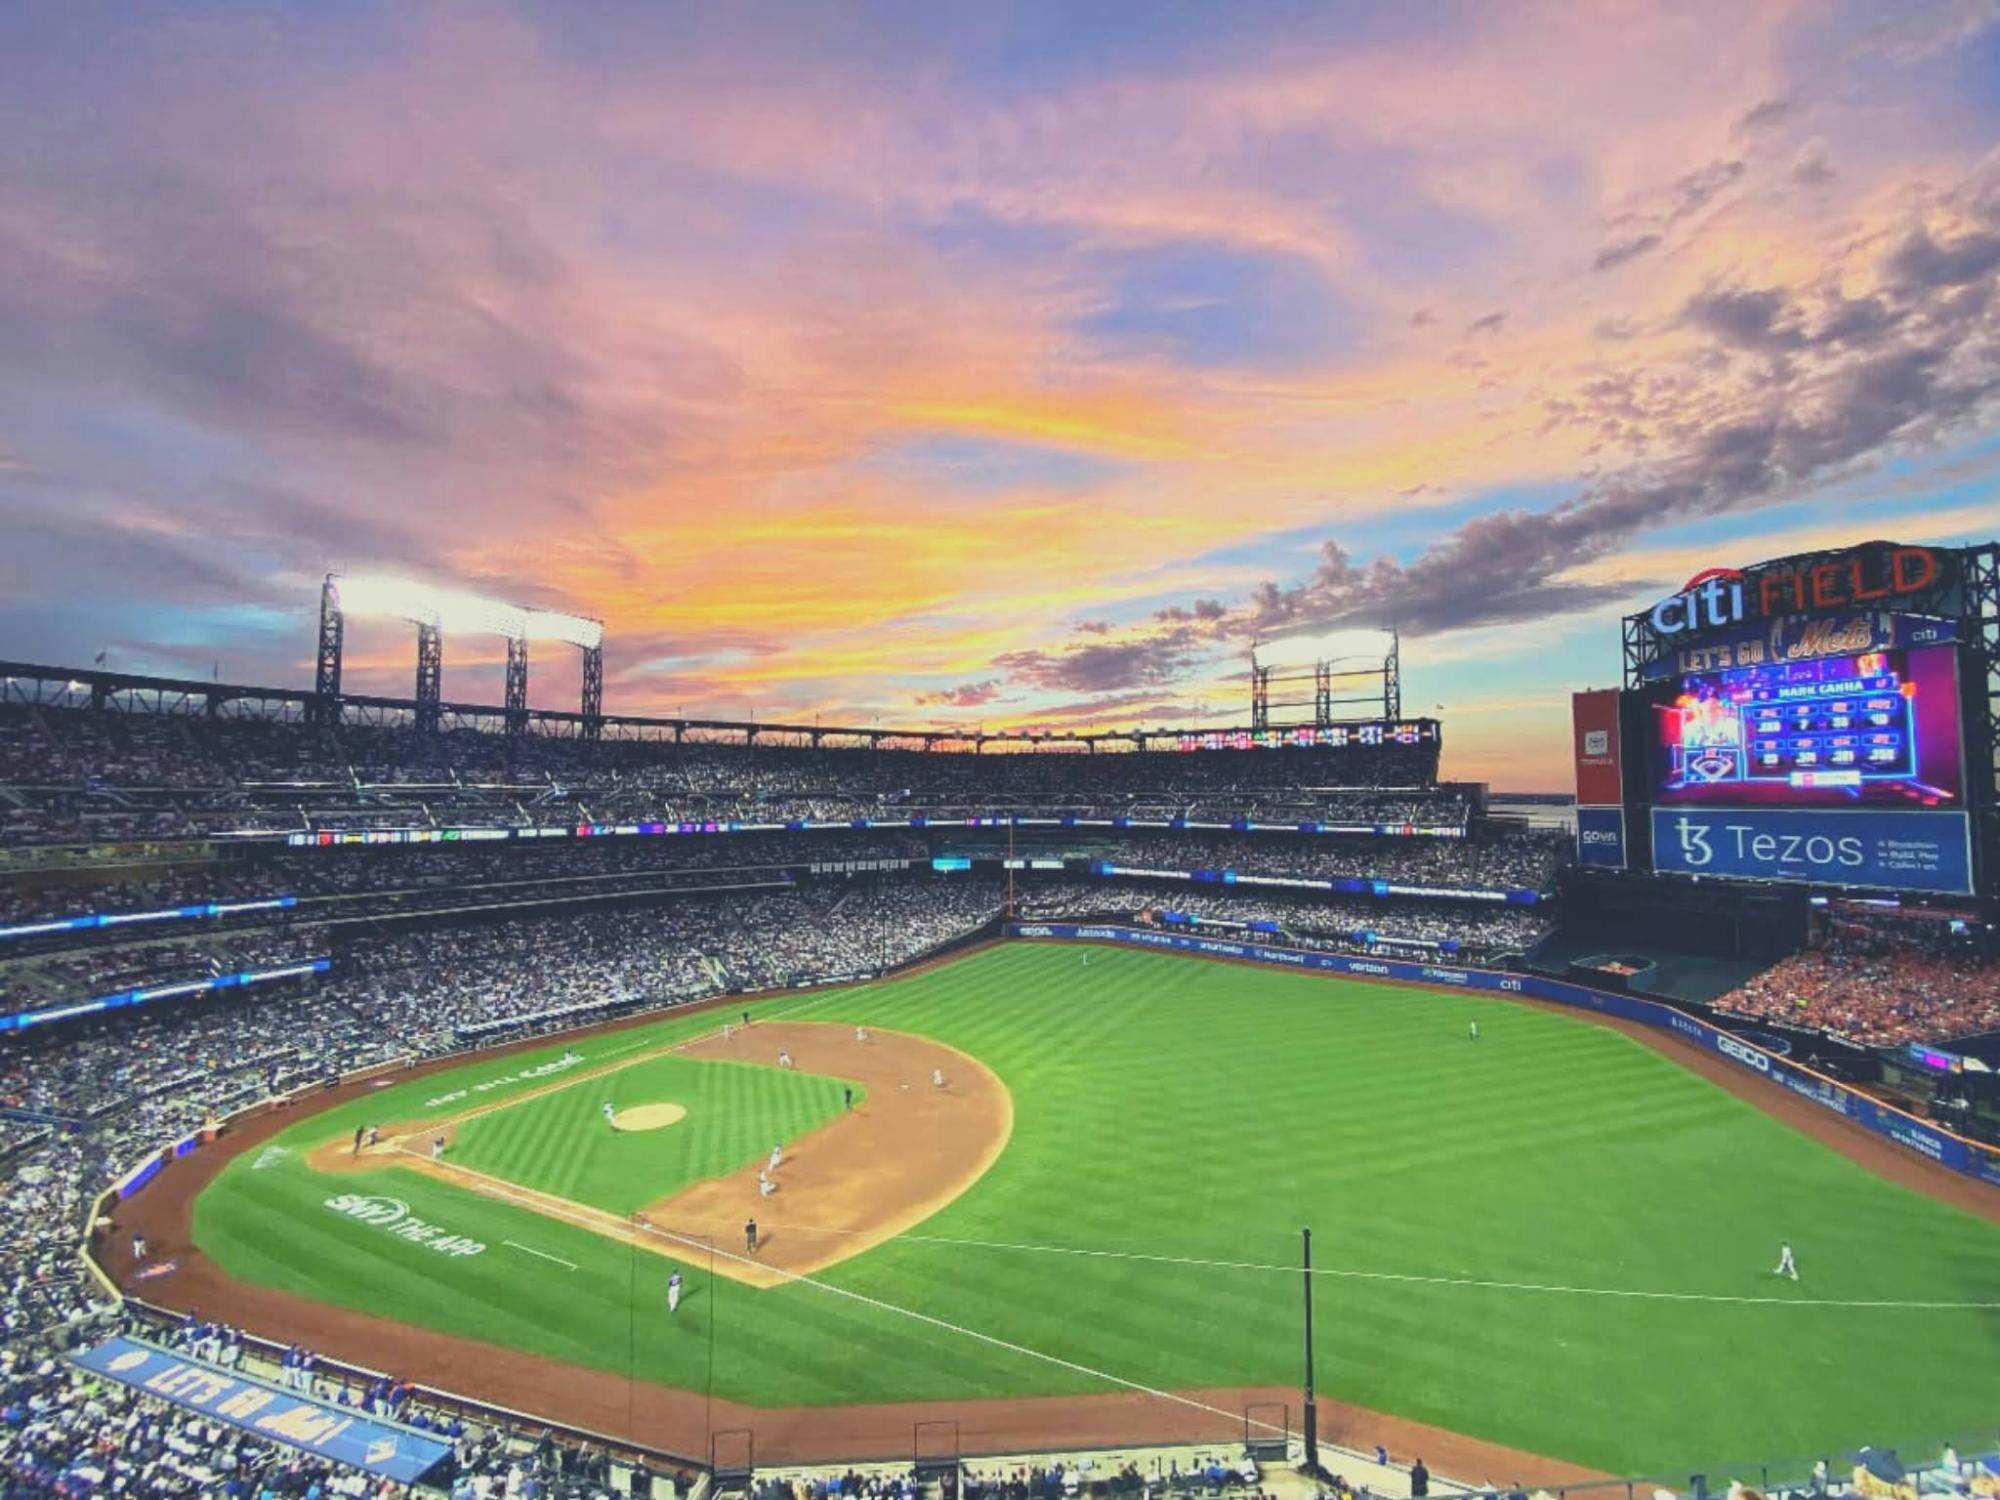 New York Mets Baseball Game Tickets at Citi Field